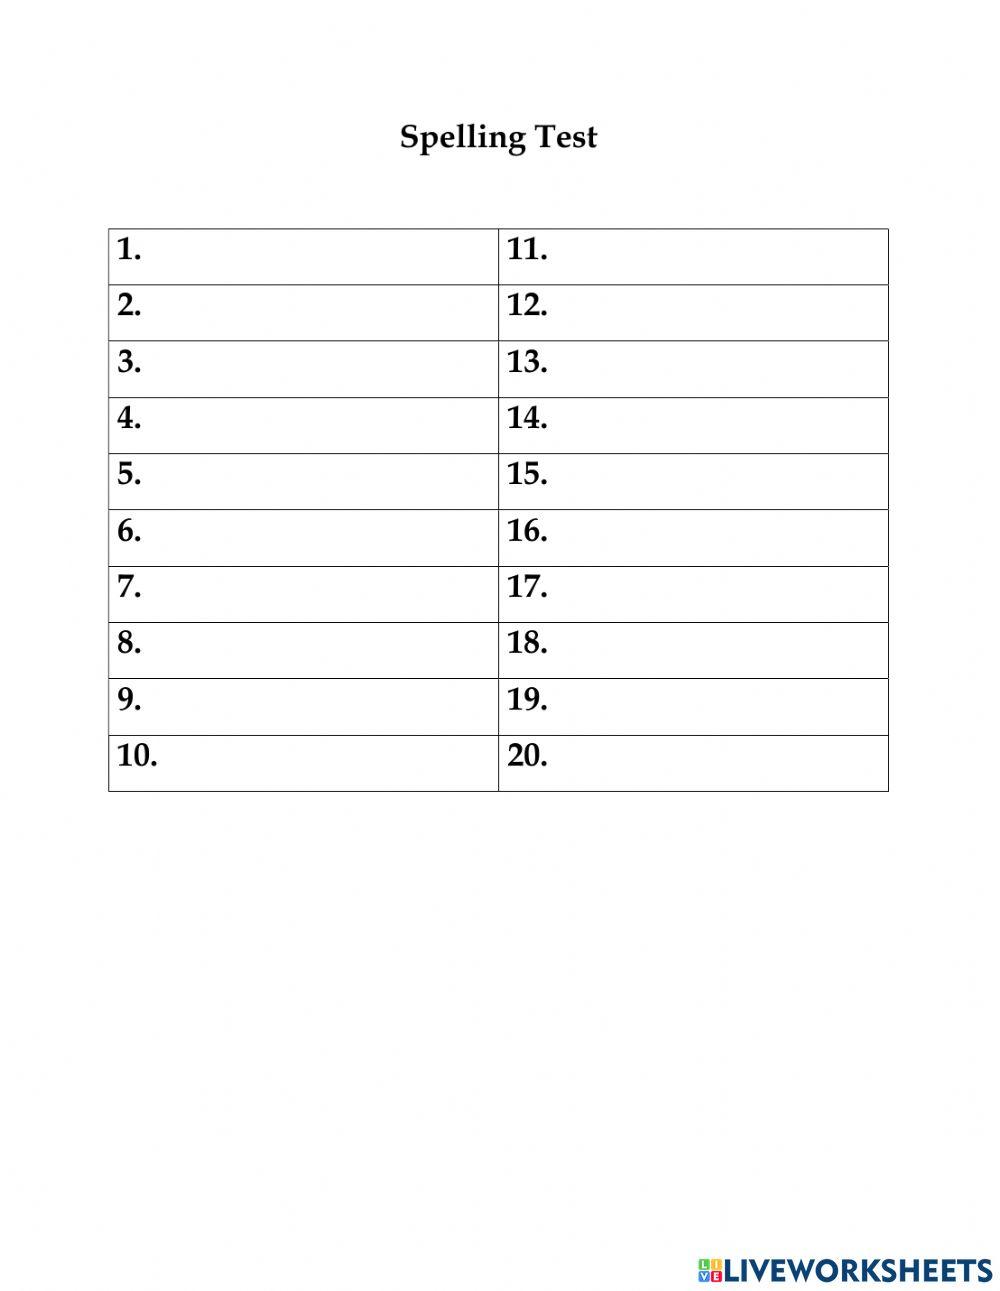 Spelling Test 2